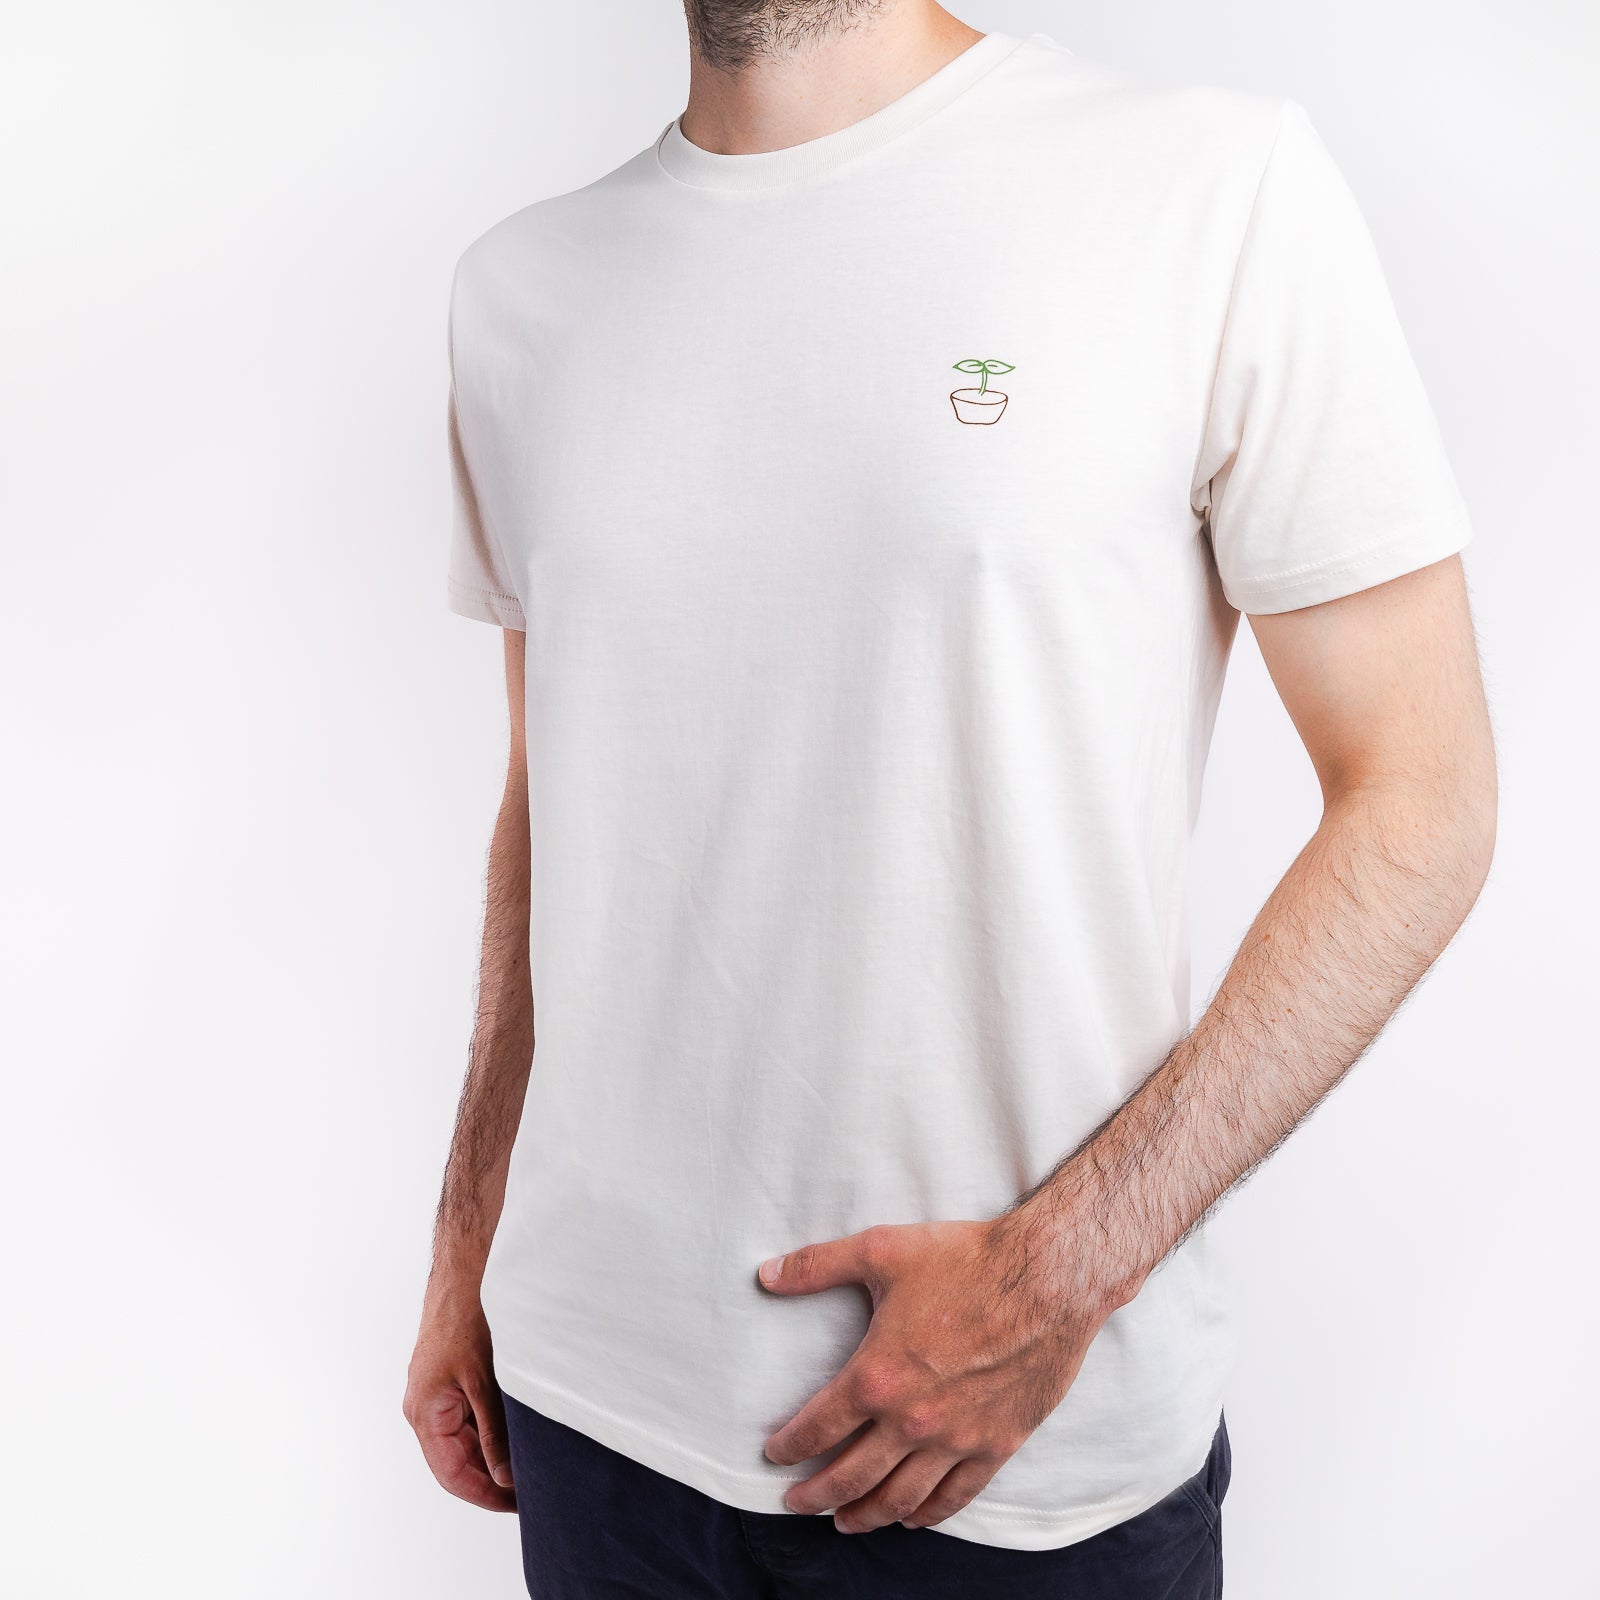 simplePlant T-Shirt - simplePlant